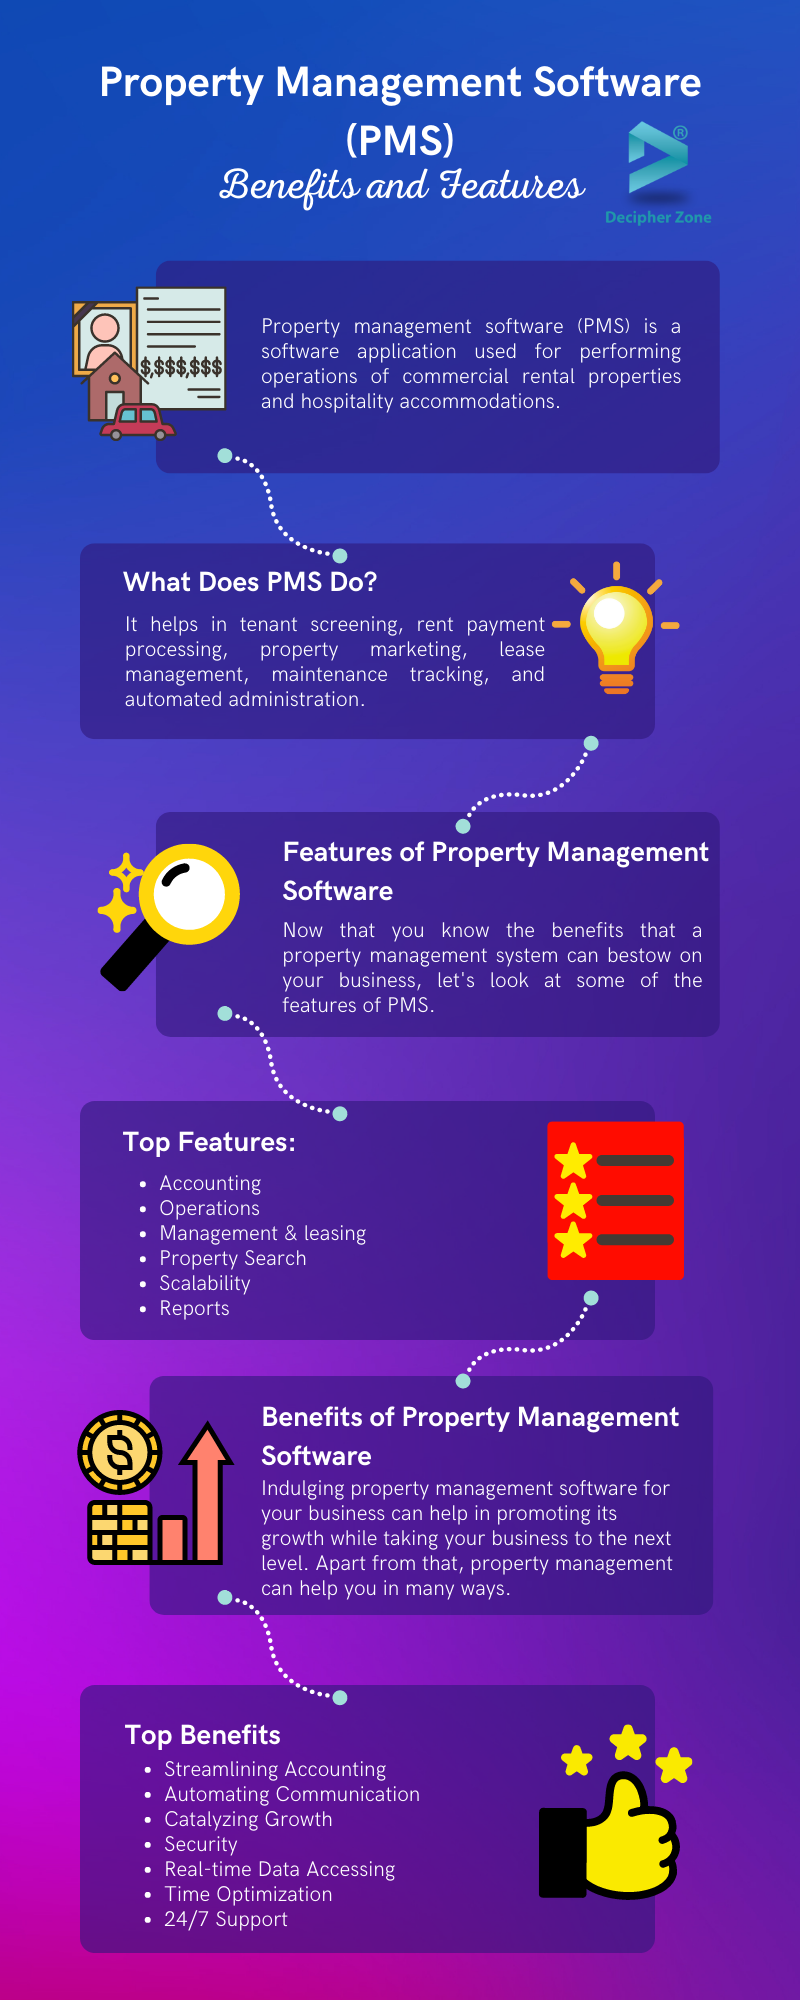 Benefits of Property Management Software